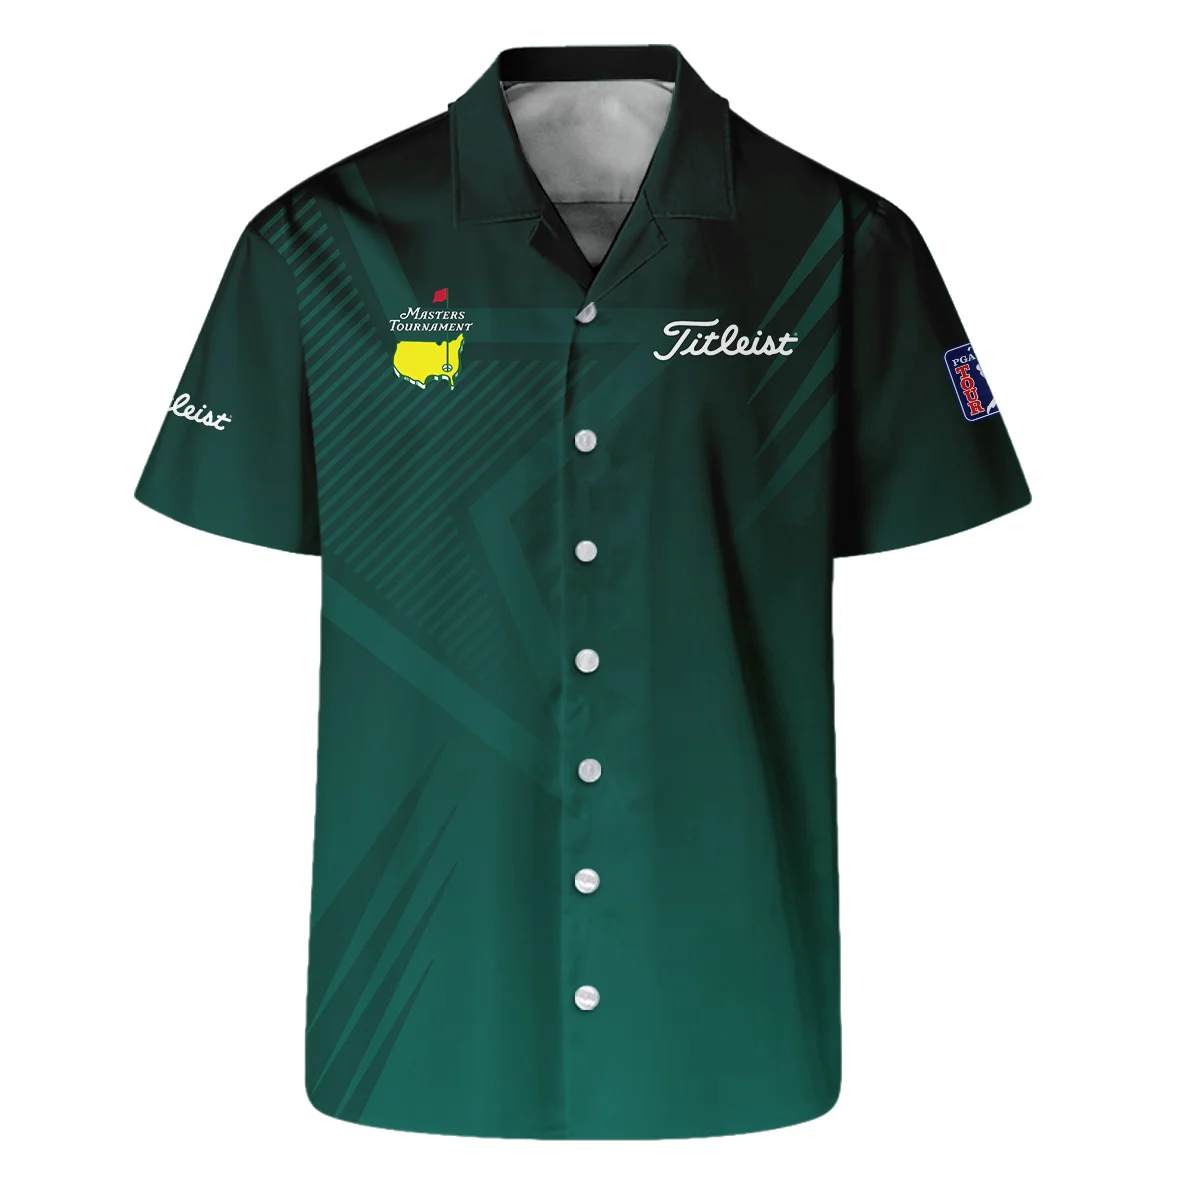 Sports Titleist Masters Tournament Sleeveless Jacket Star Pattern Dark Green Gradient Golf Sleeveless Jacket